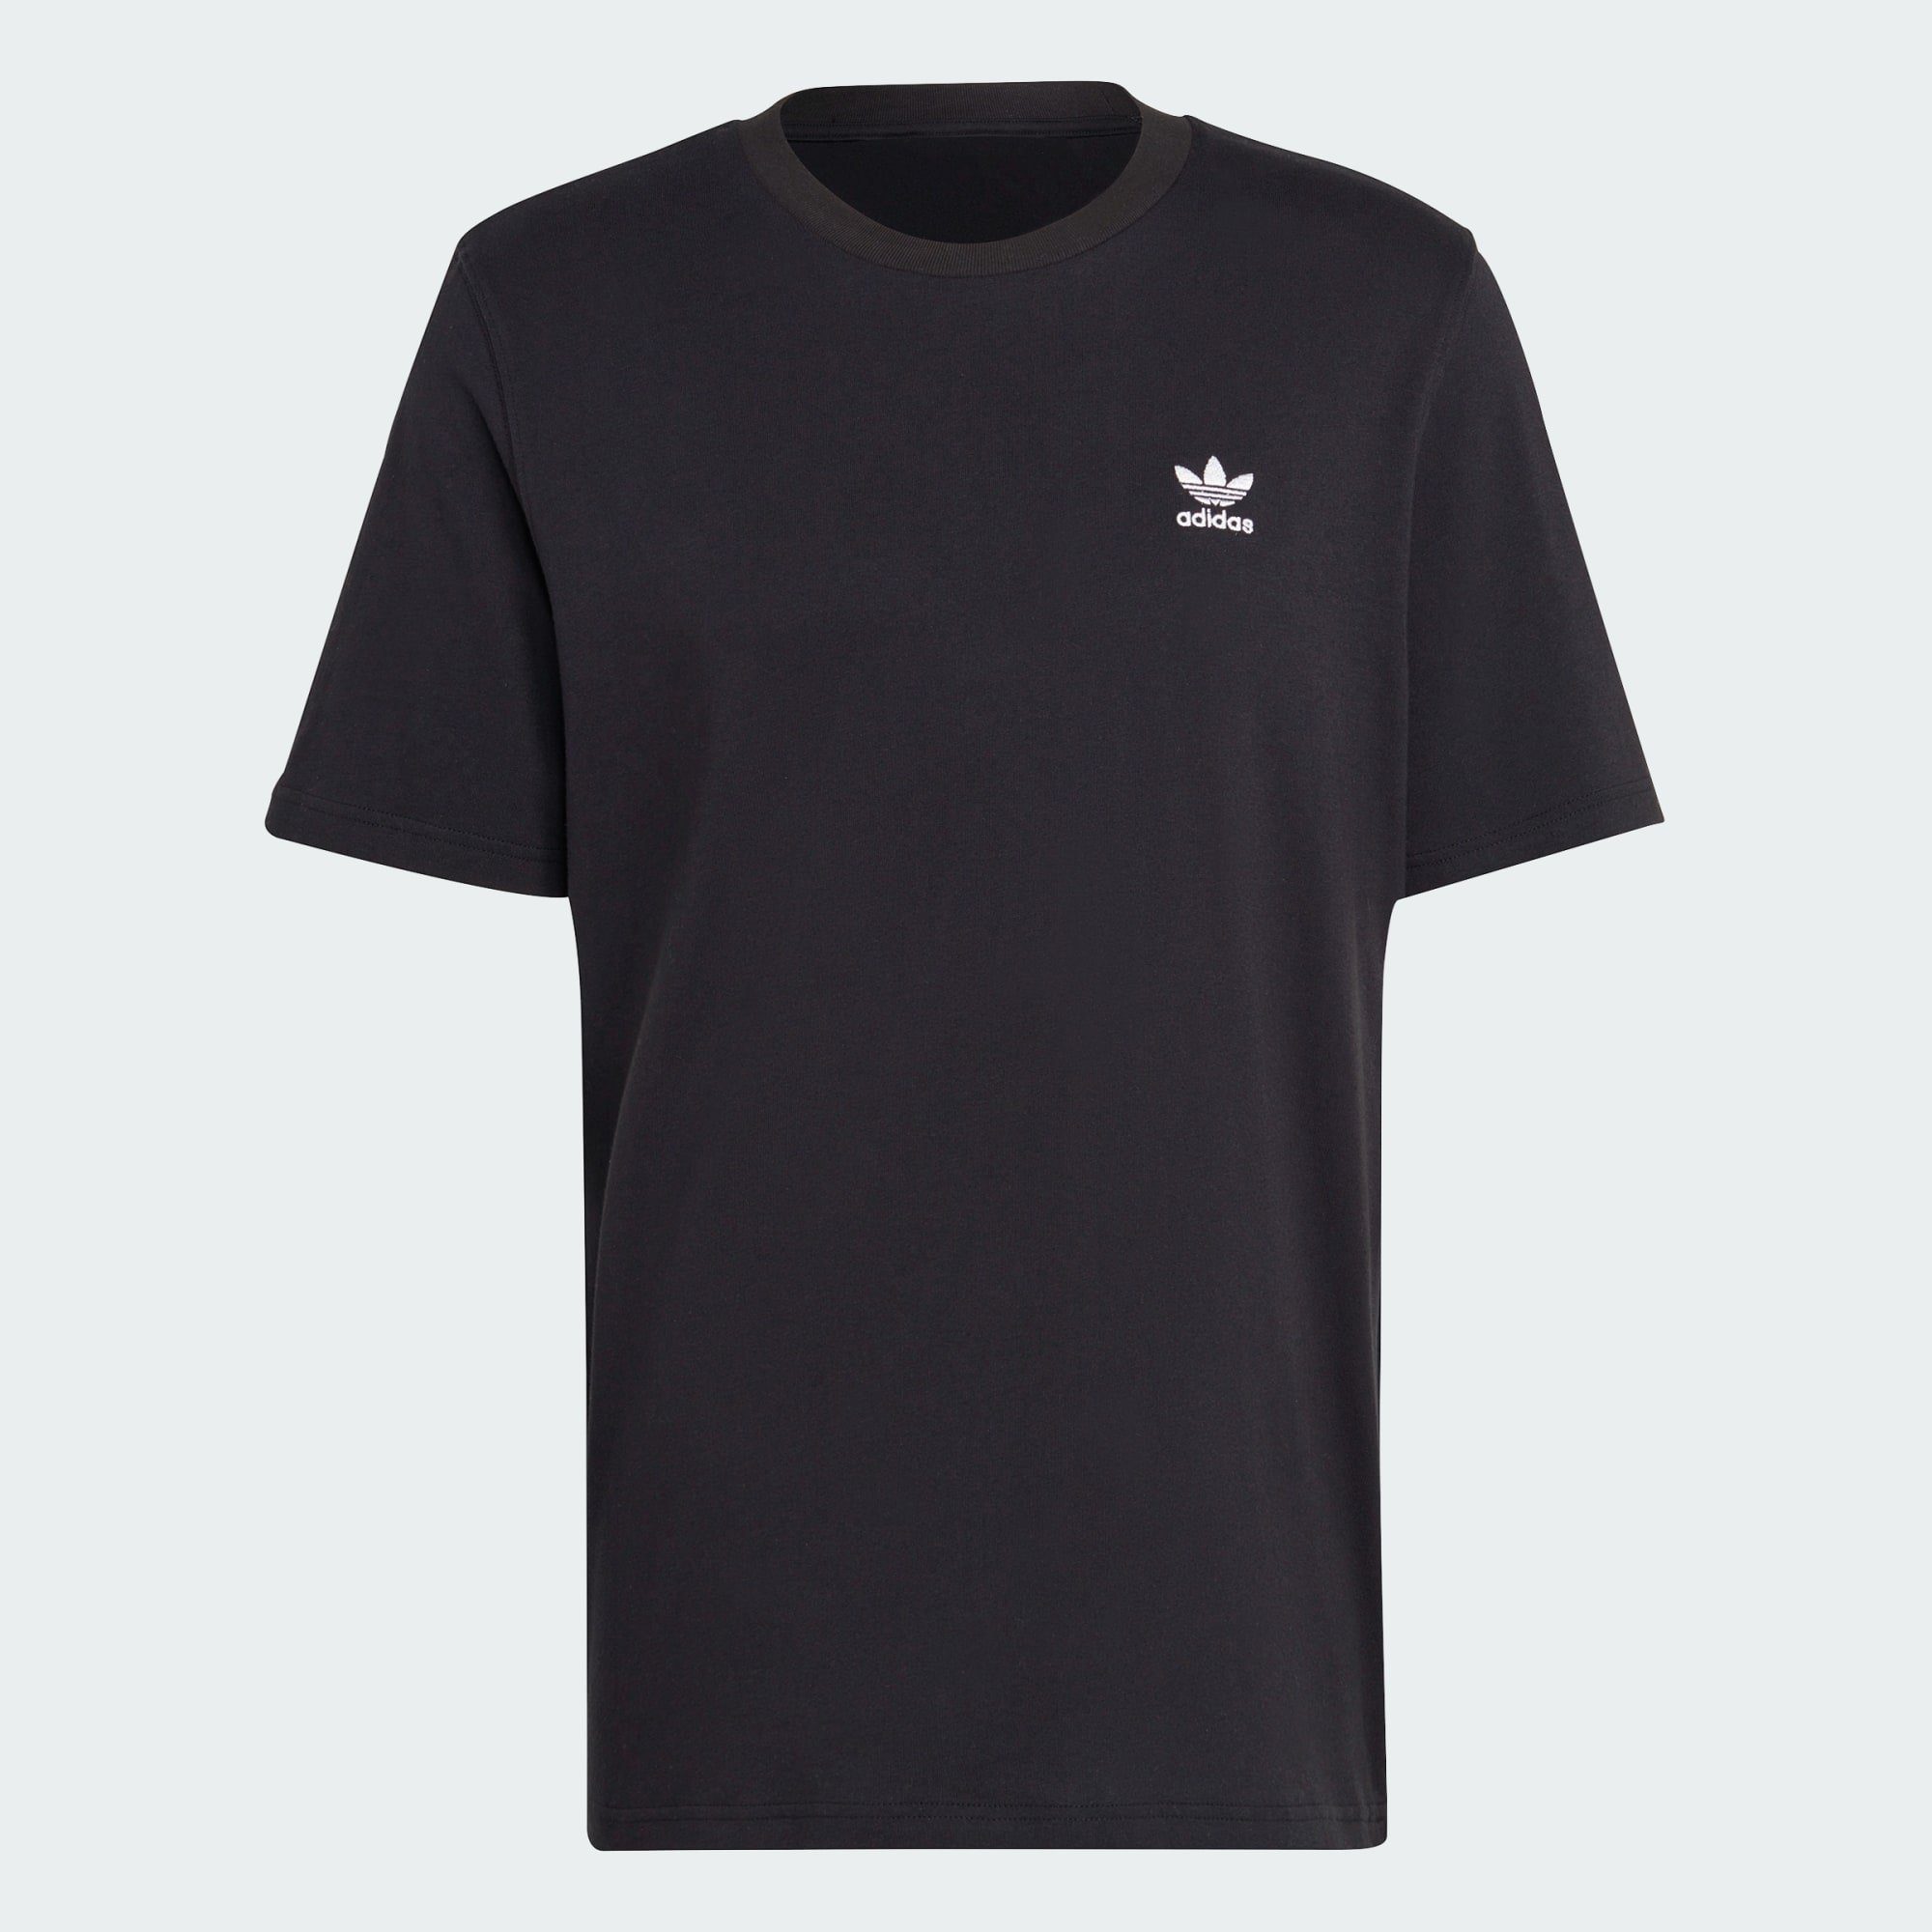 Originals ESSENTIALS TREFOIL White T-SHIRT Black T-Shirt / adidas